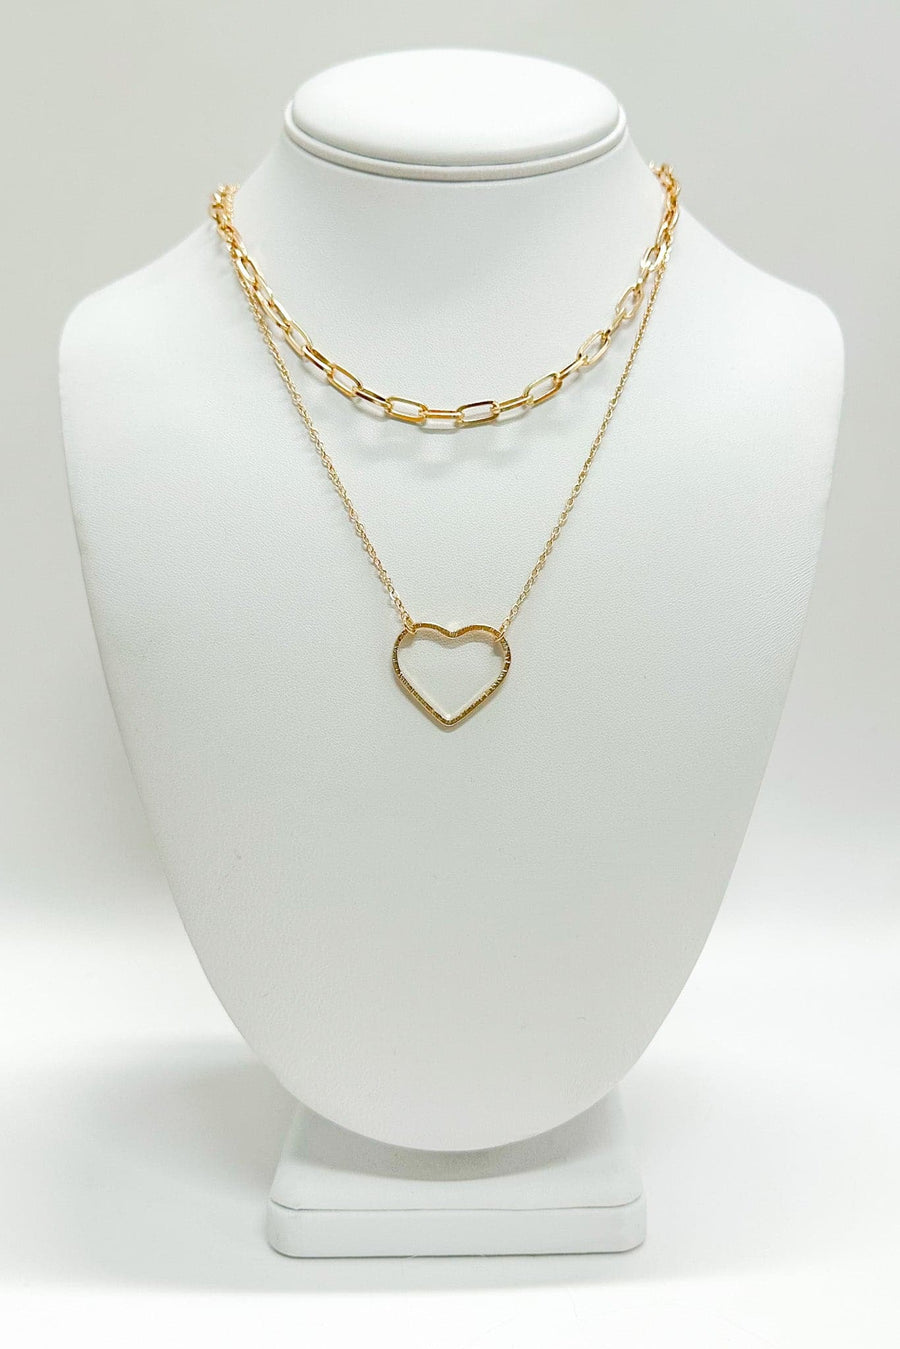 Gold Memorable Romance Heart Chain Layered Necklace - kitchencabinetmagic